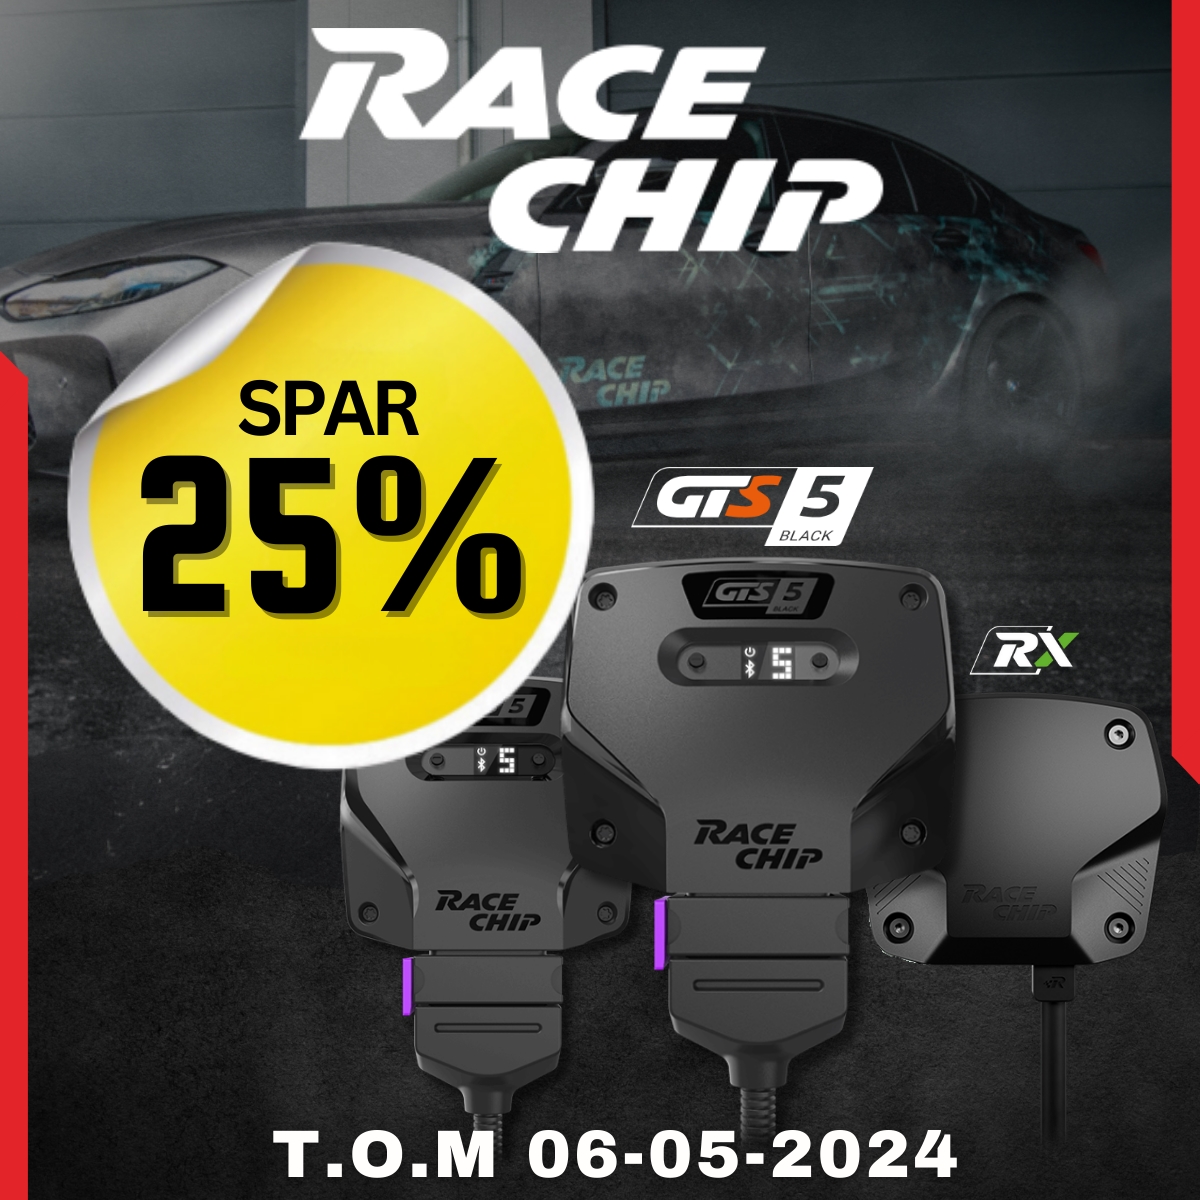 Spara 25% på RaceChip